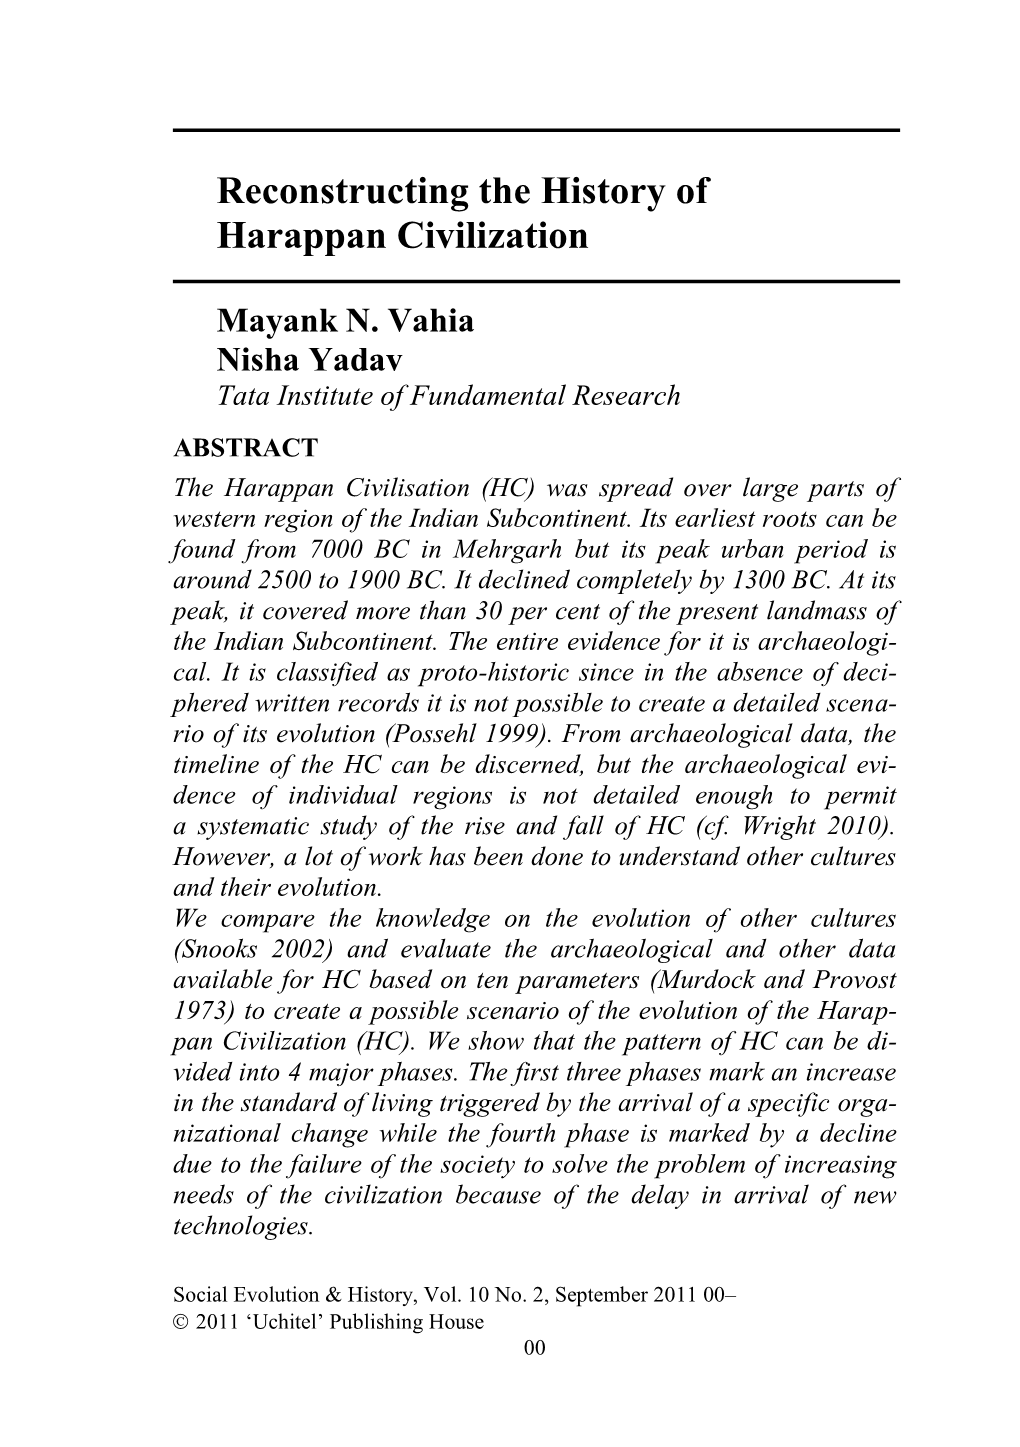 Evolution of Harappan Civilisation